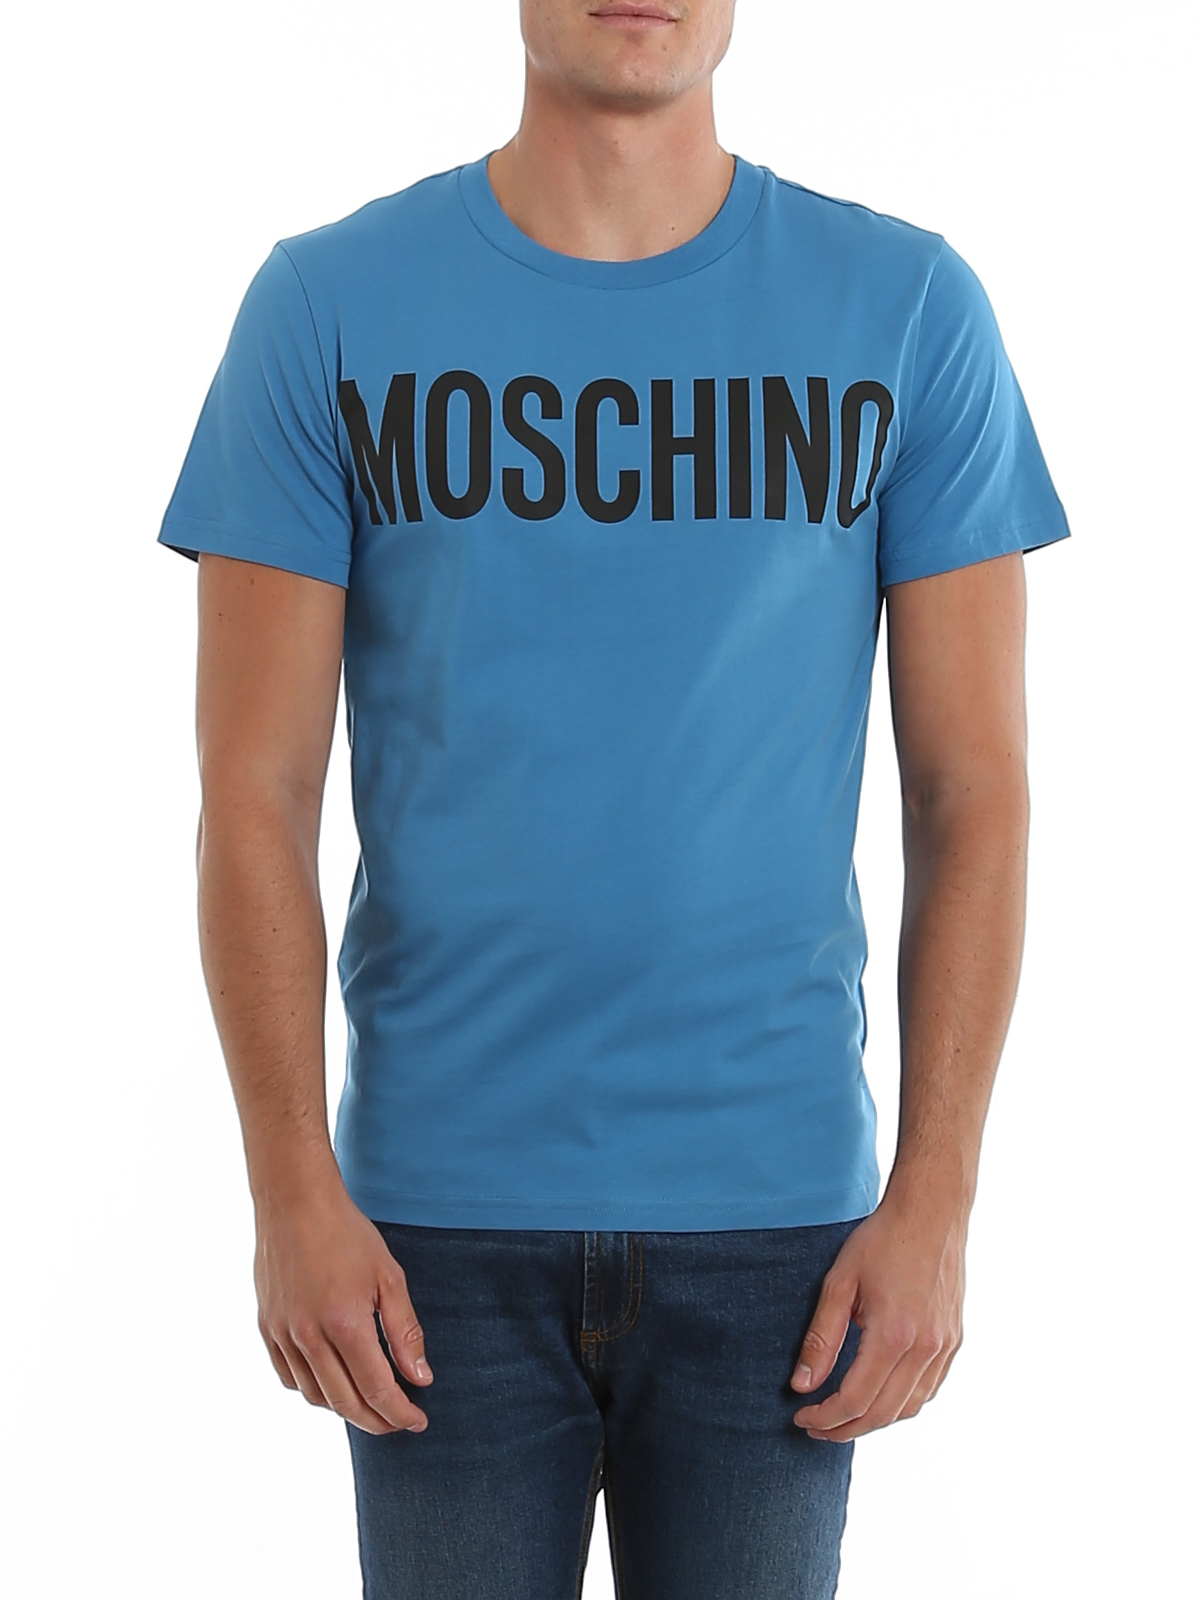 moschino blue shirt